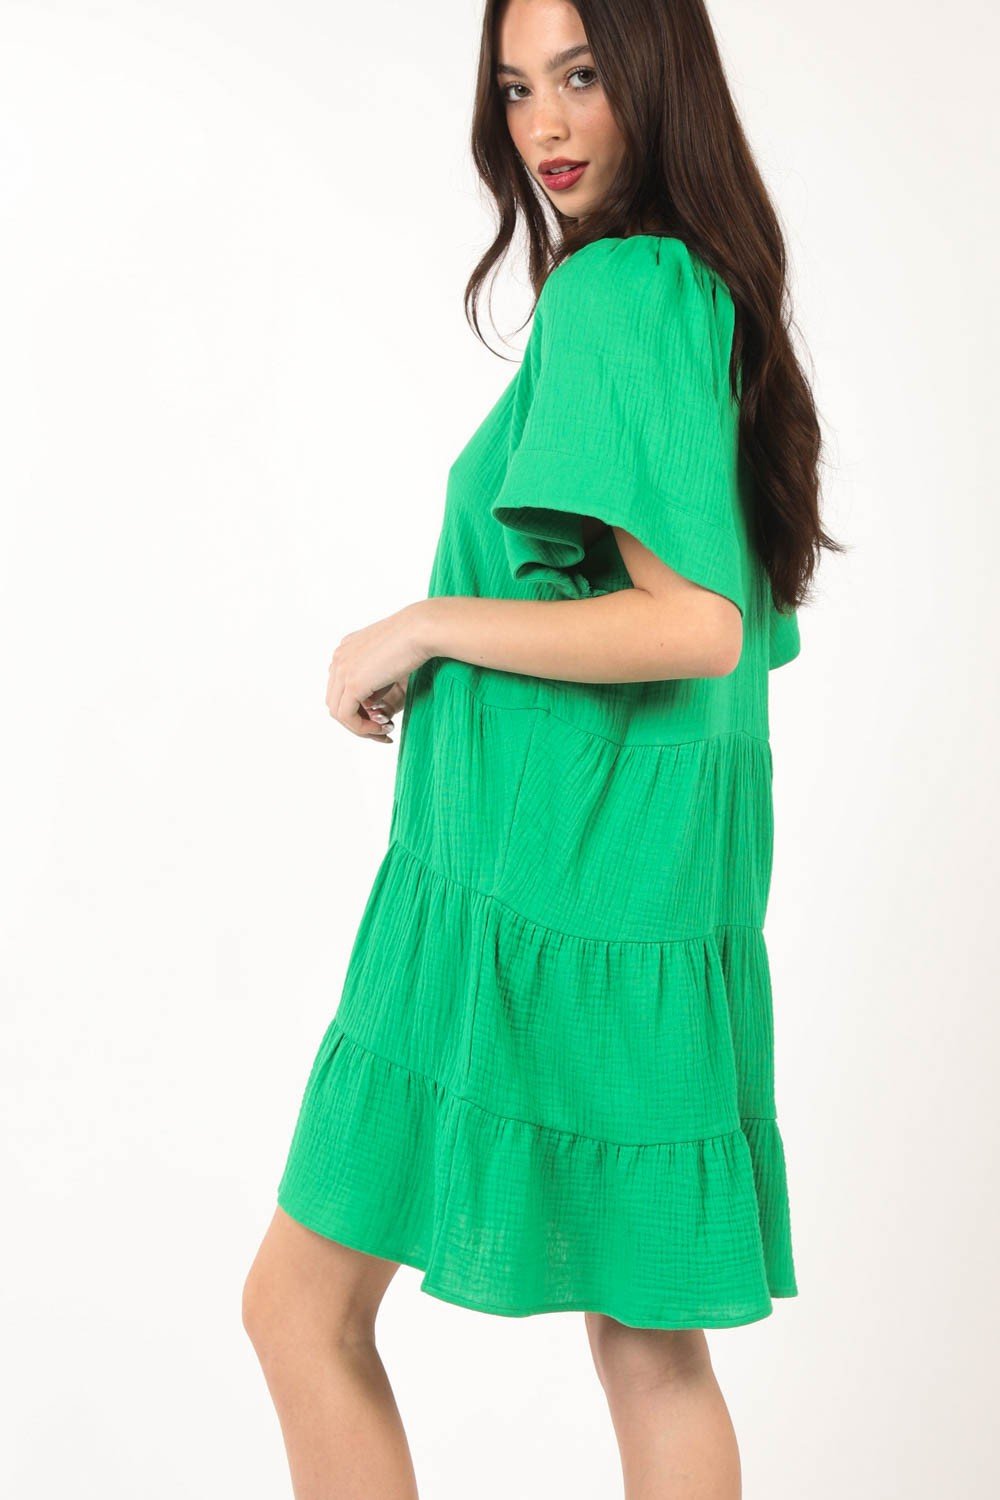 Textured Cotton V-Neck Tiered Mini Dress in GreenMini DressVery J